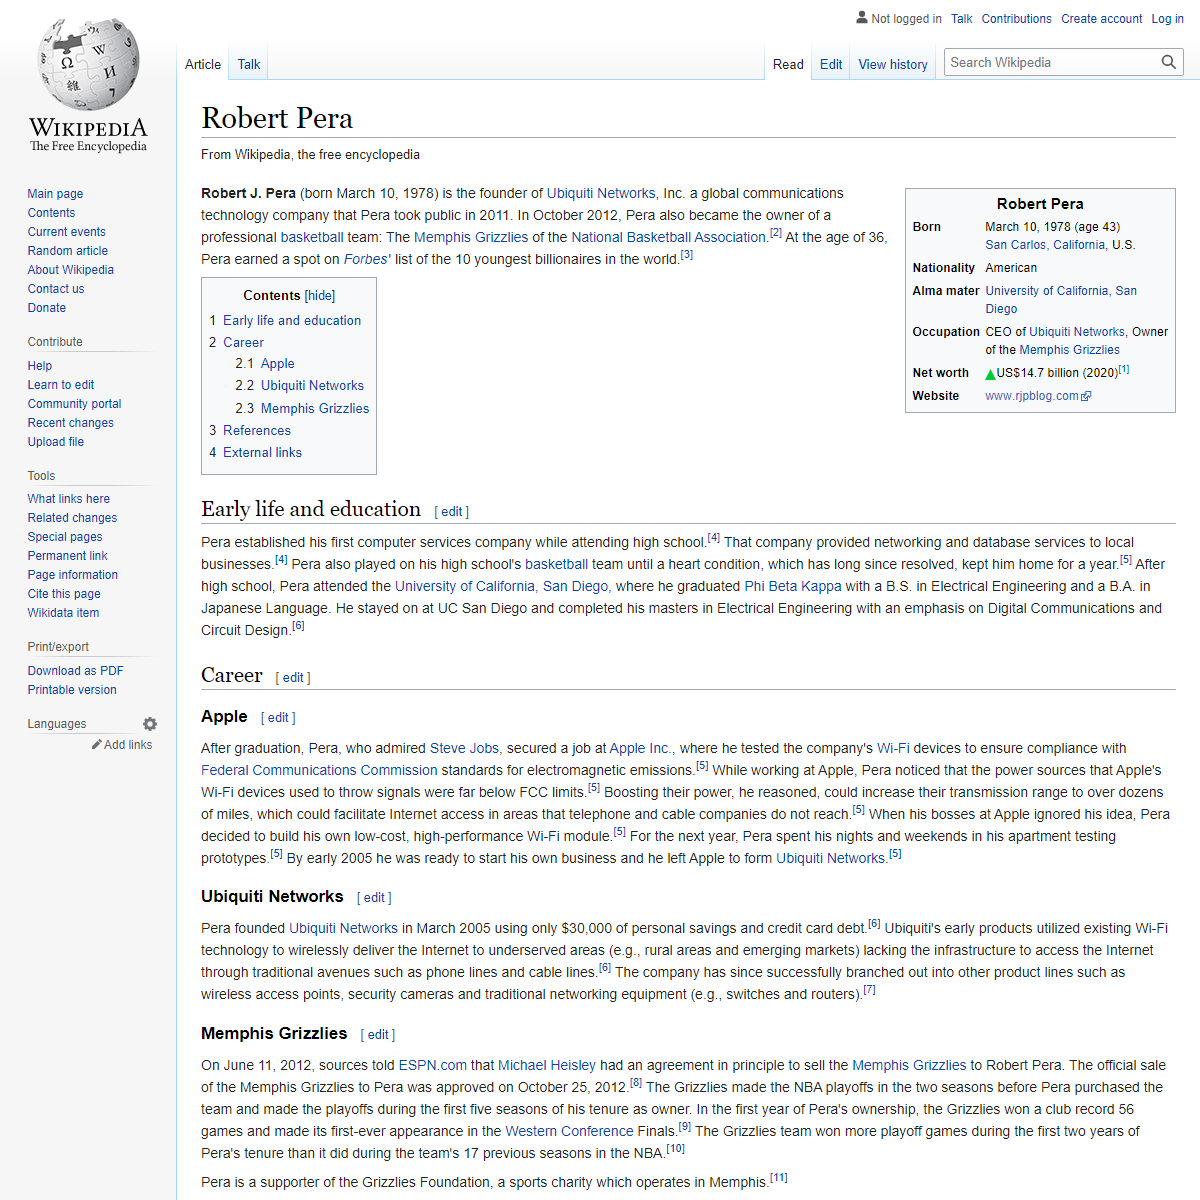 A complete backup of https://en.wikipedia.org/wiki/Robert_Pera